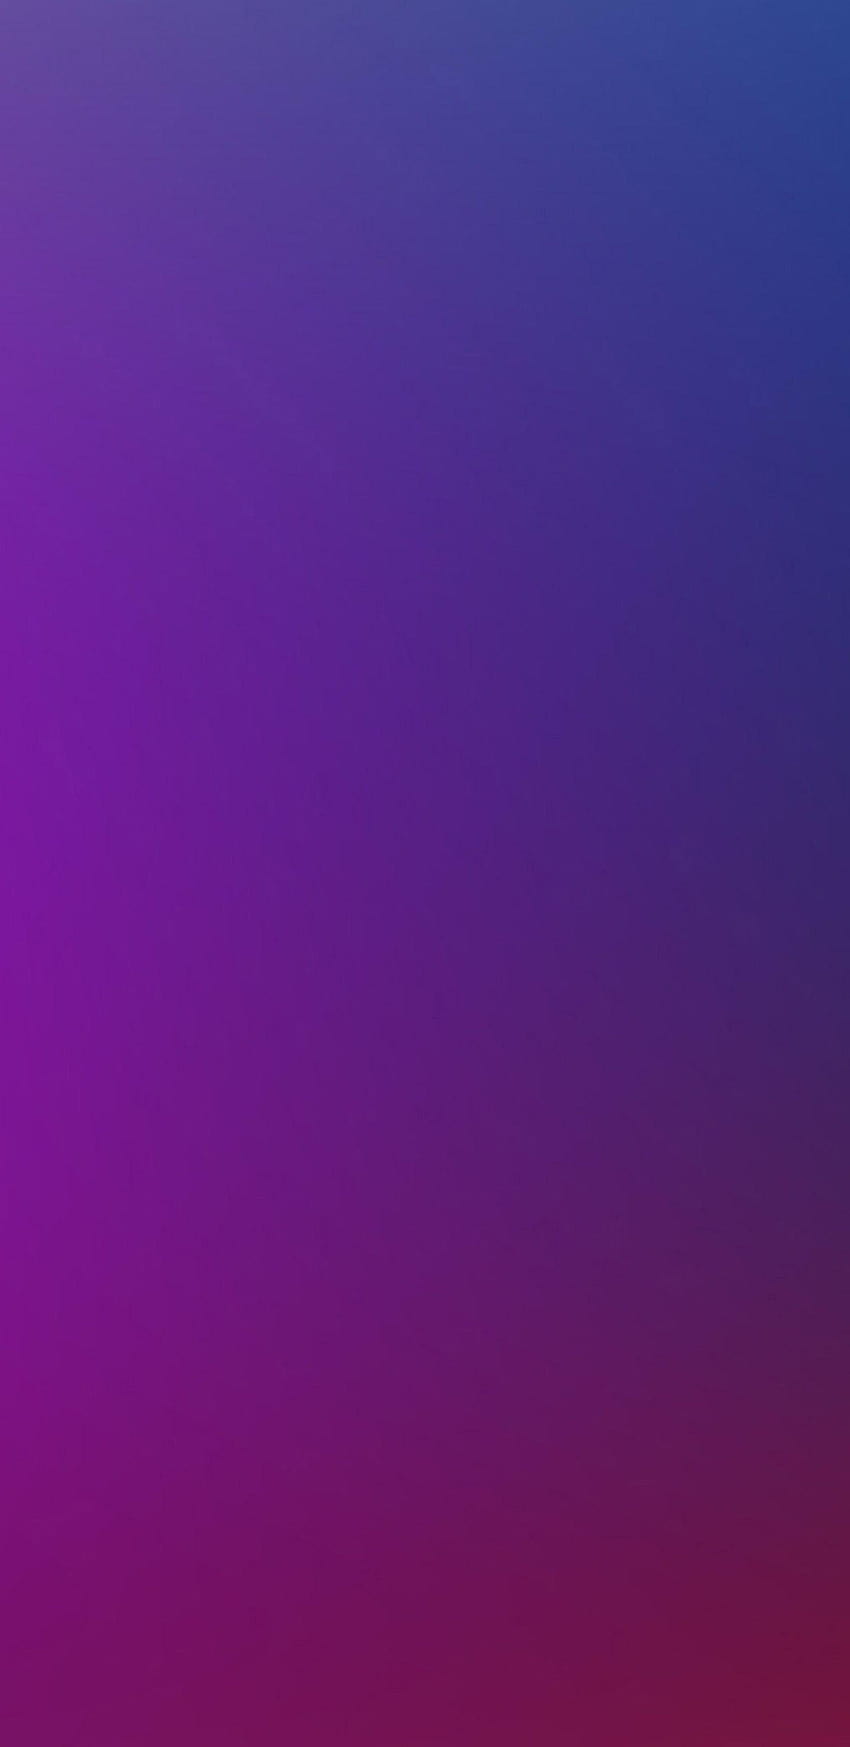 sg22 biru ungu malam kerja gradasi buram Samsung Galaxy Note 9 wallpaper ponsel HD